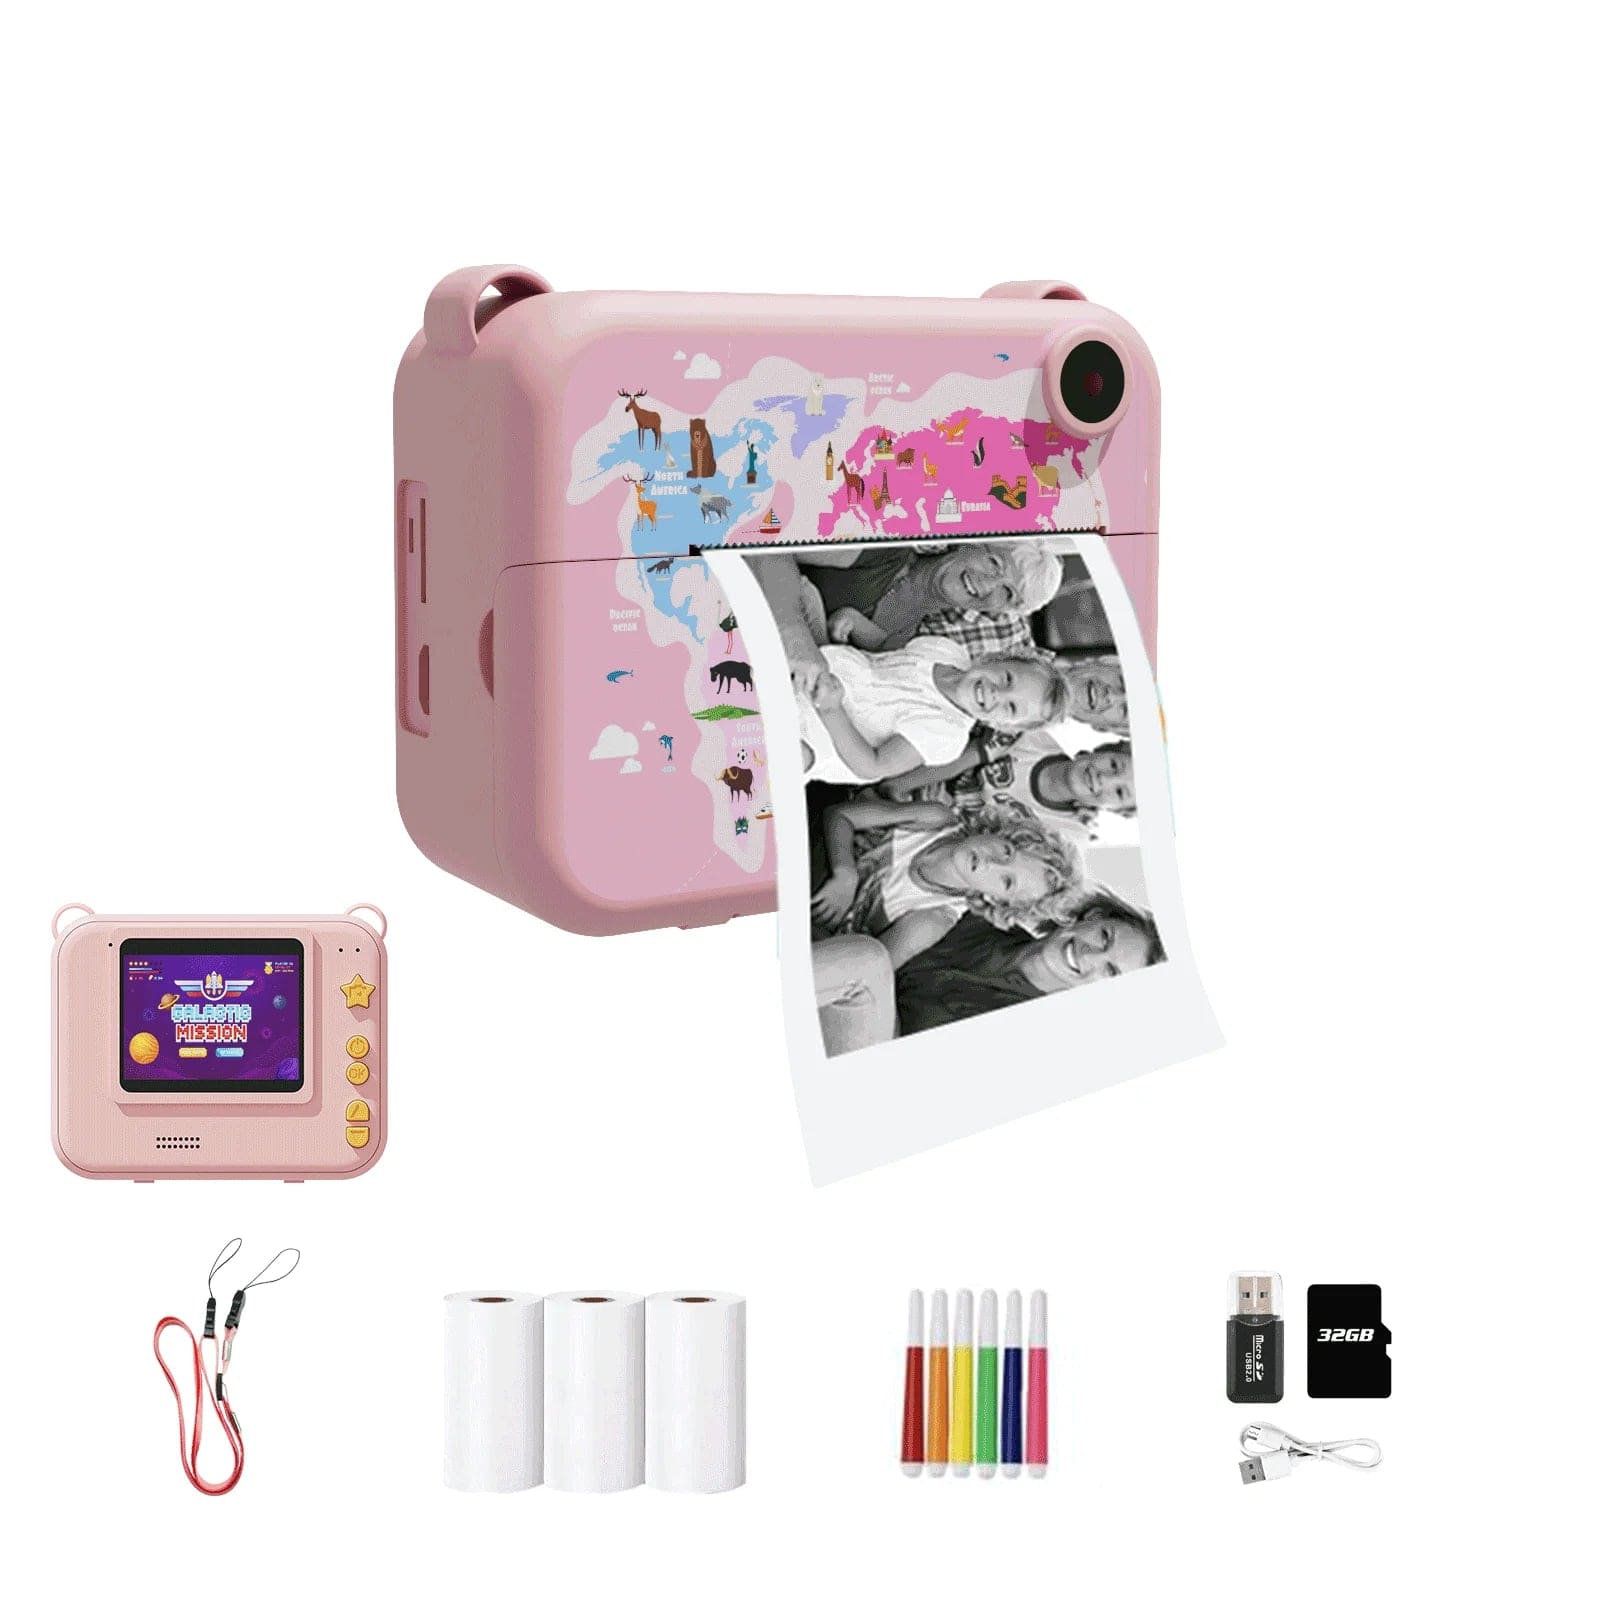 HomeBound Essentials Pink 32G / CHINA Digital Camera Photography Instant Printer